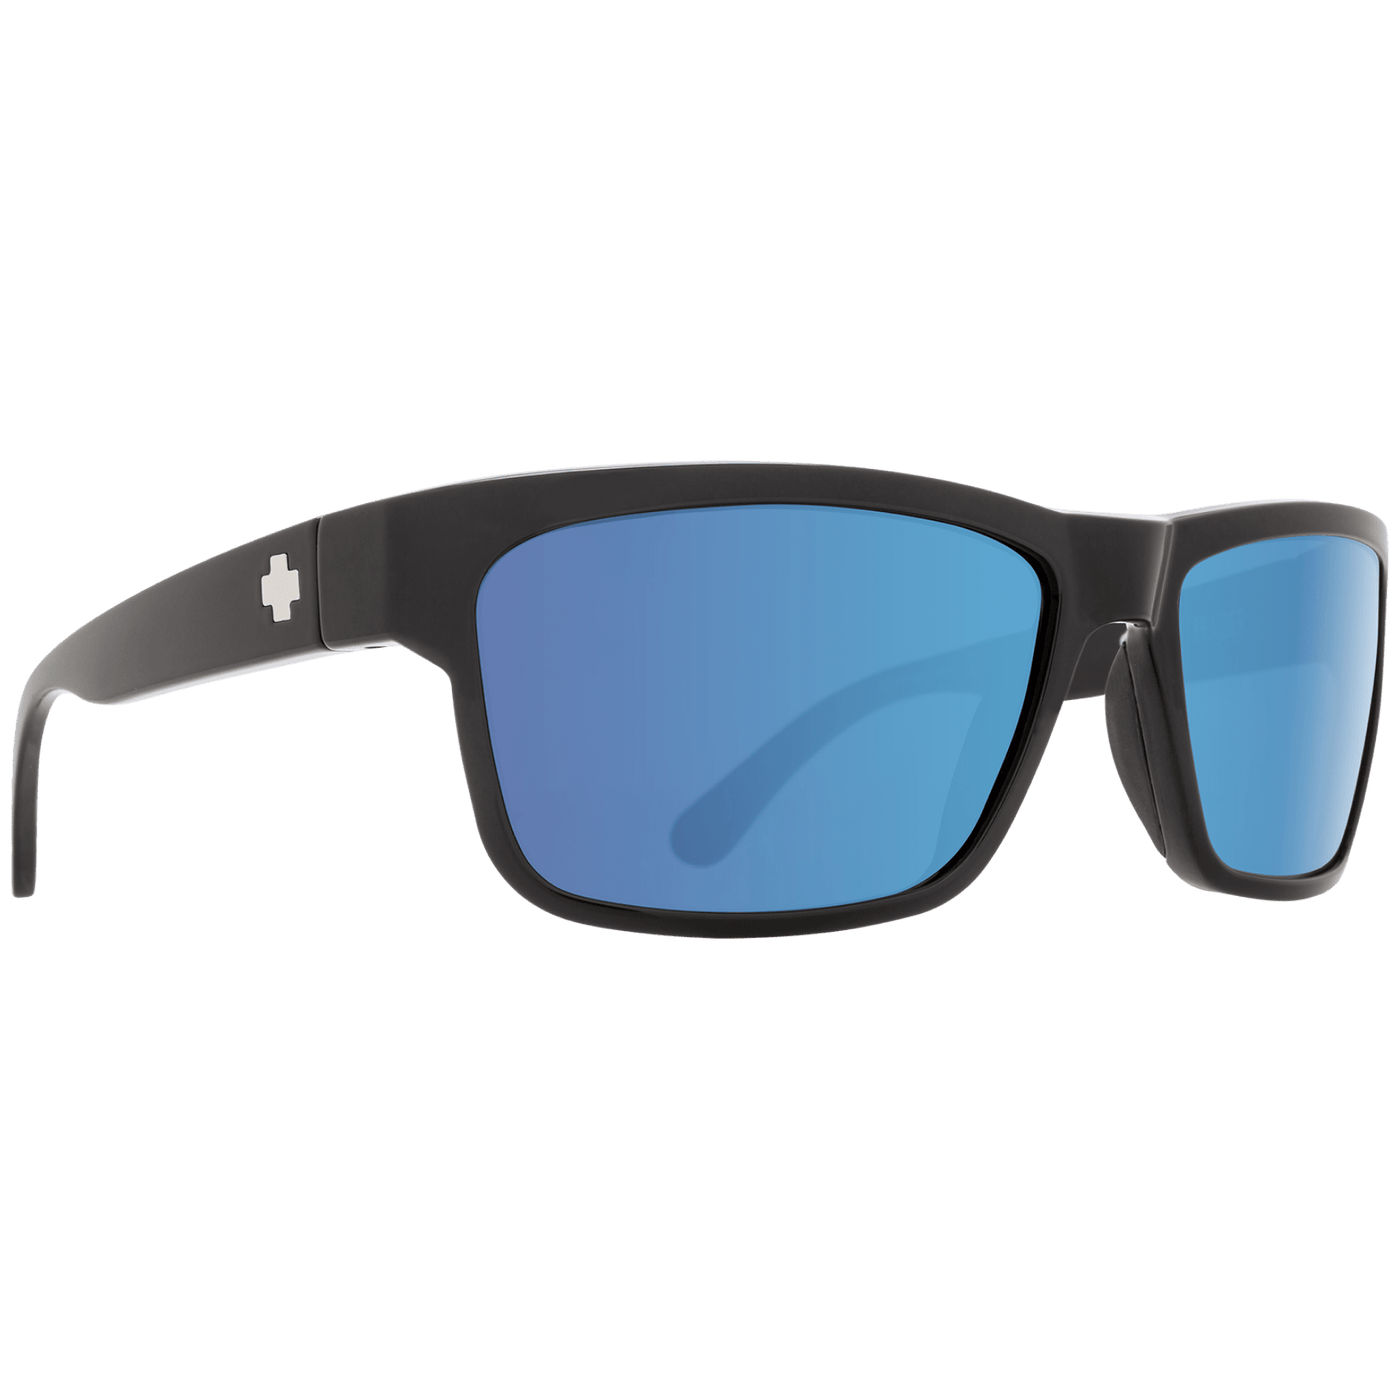 SPY FRAZIER Polarized Sunglasses, Happy Lens - Light Blue